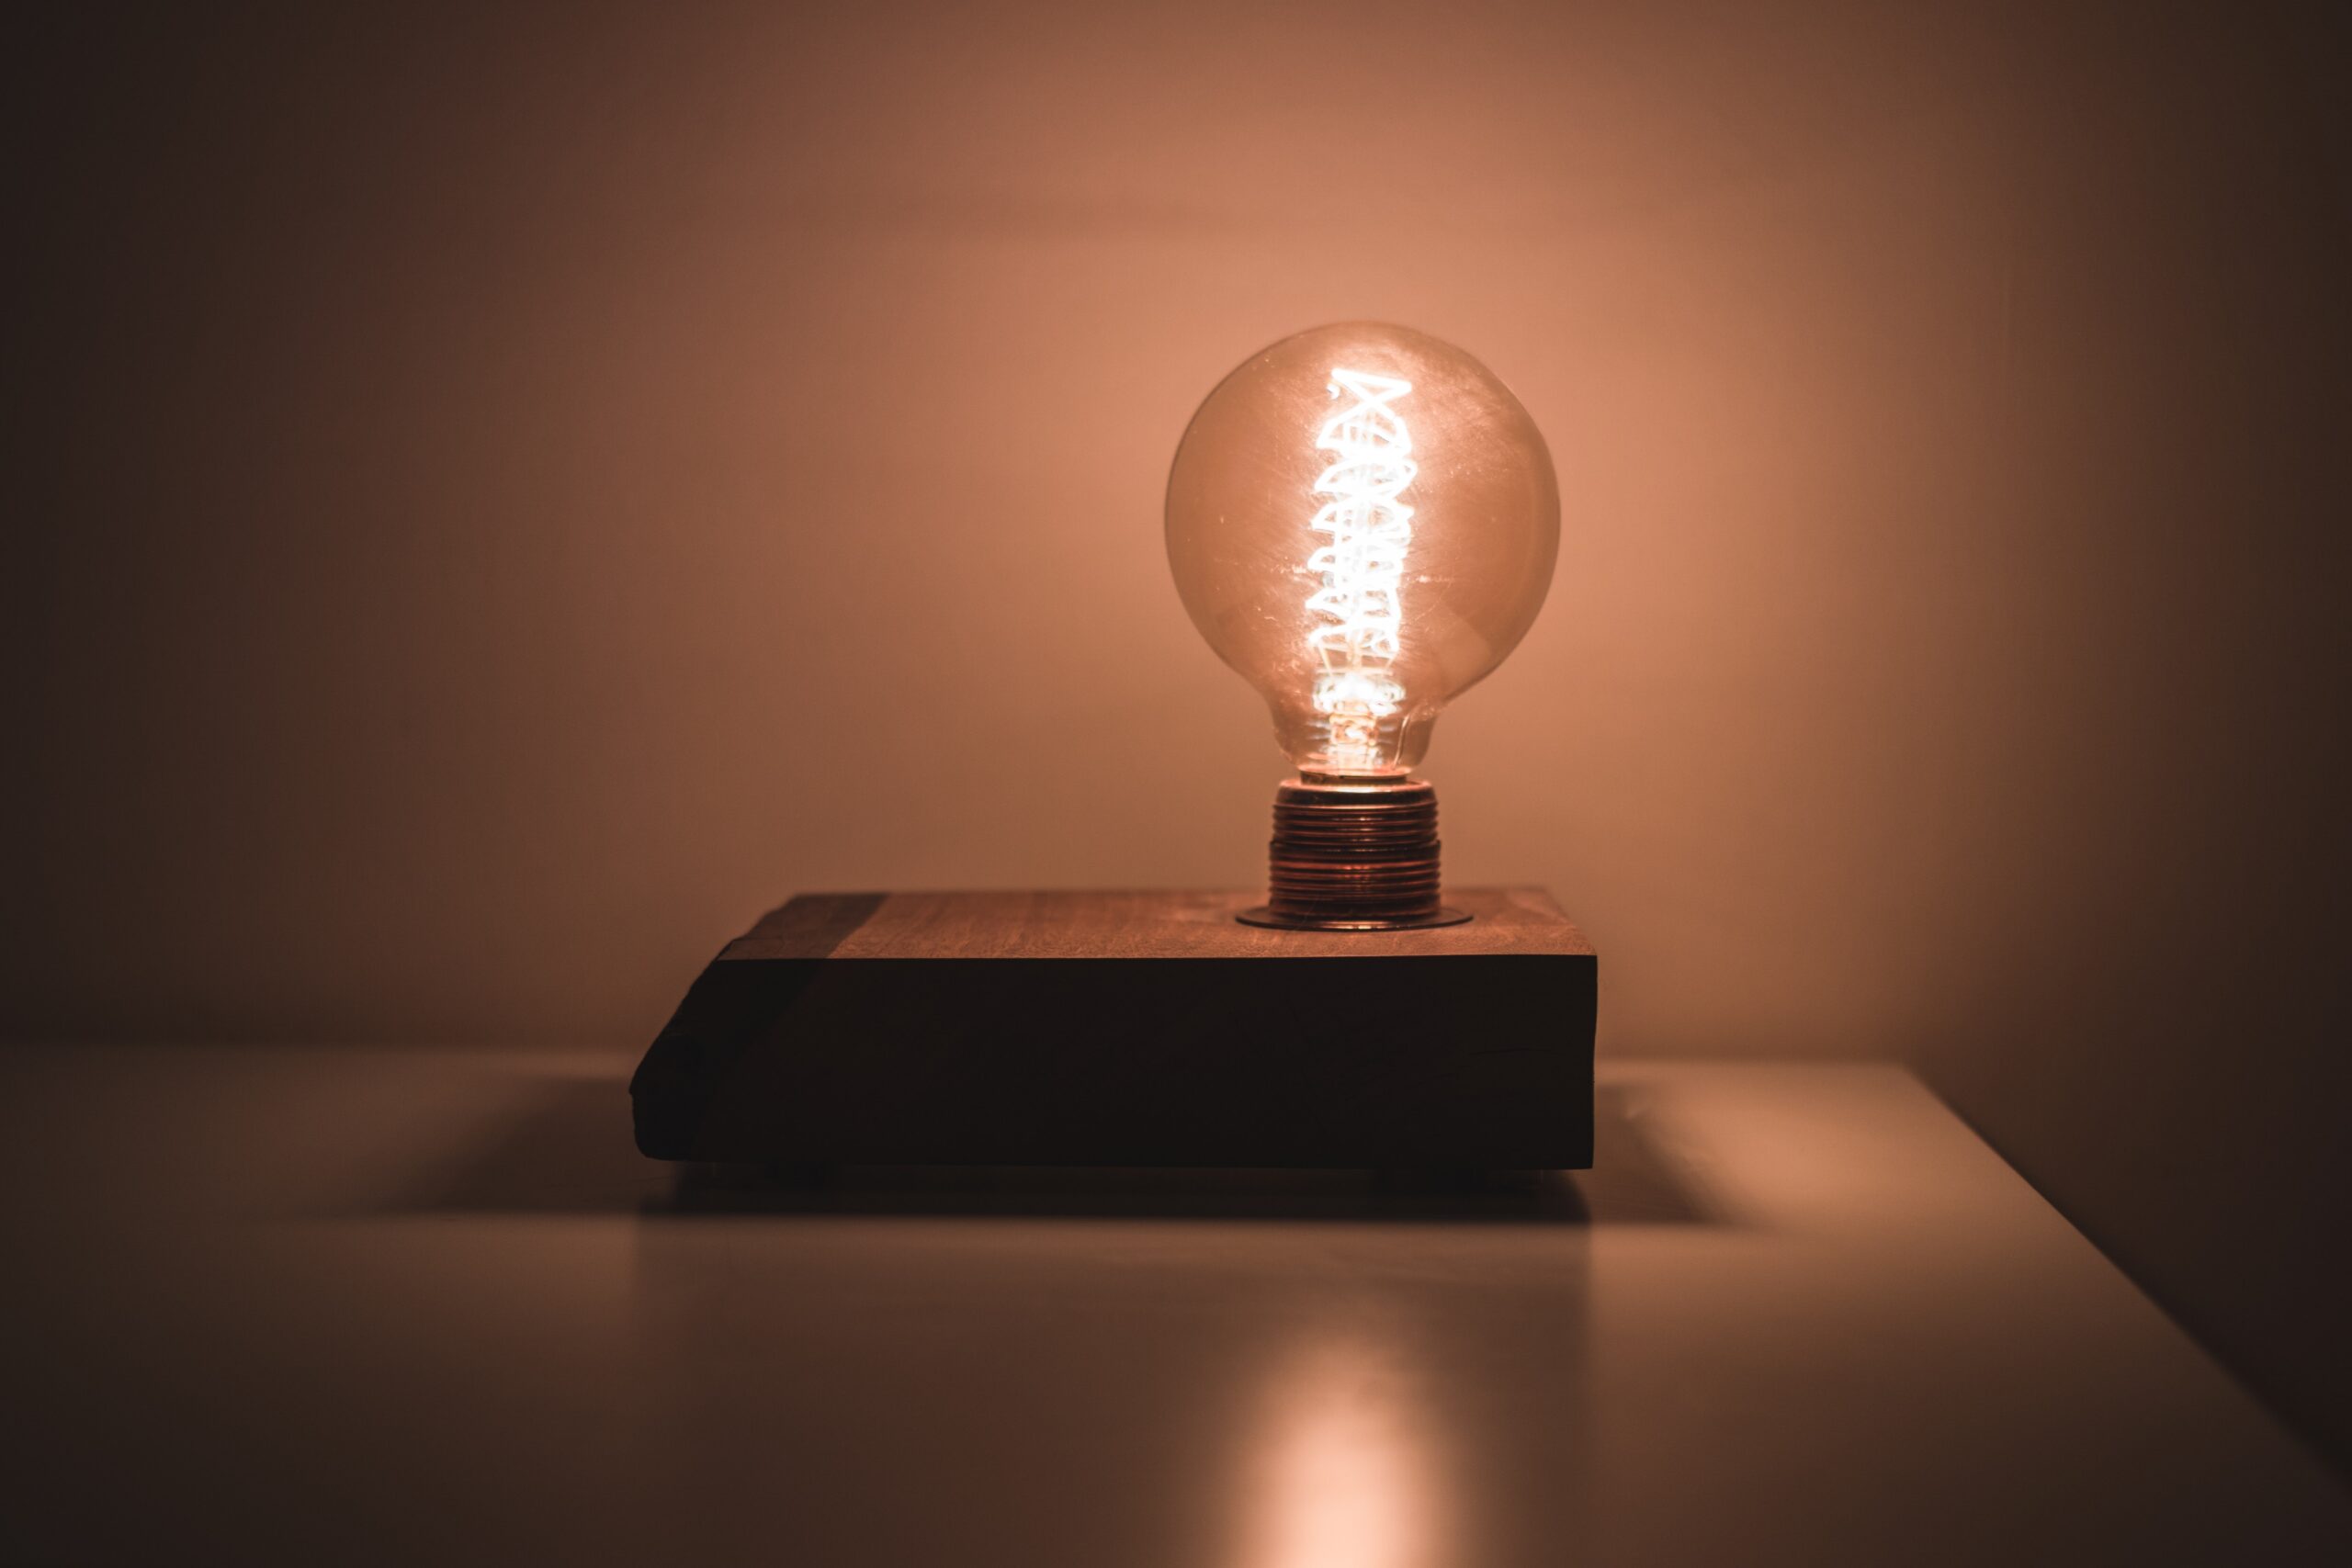 lightbulb on a table in a dim lit room